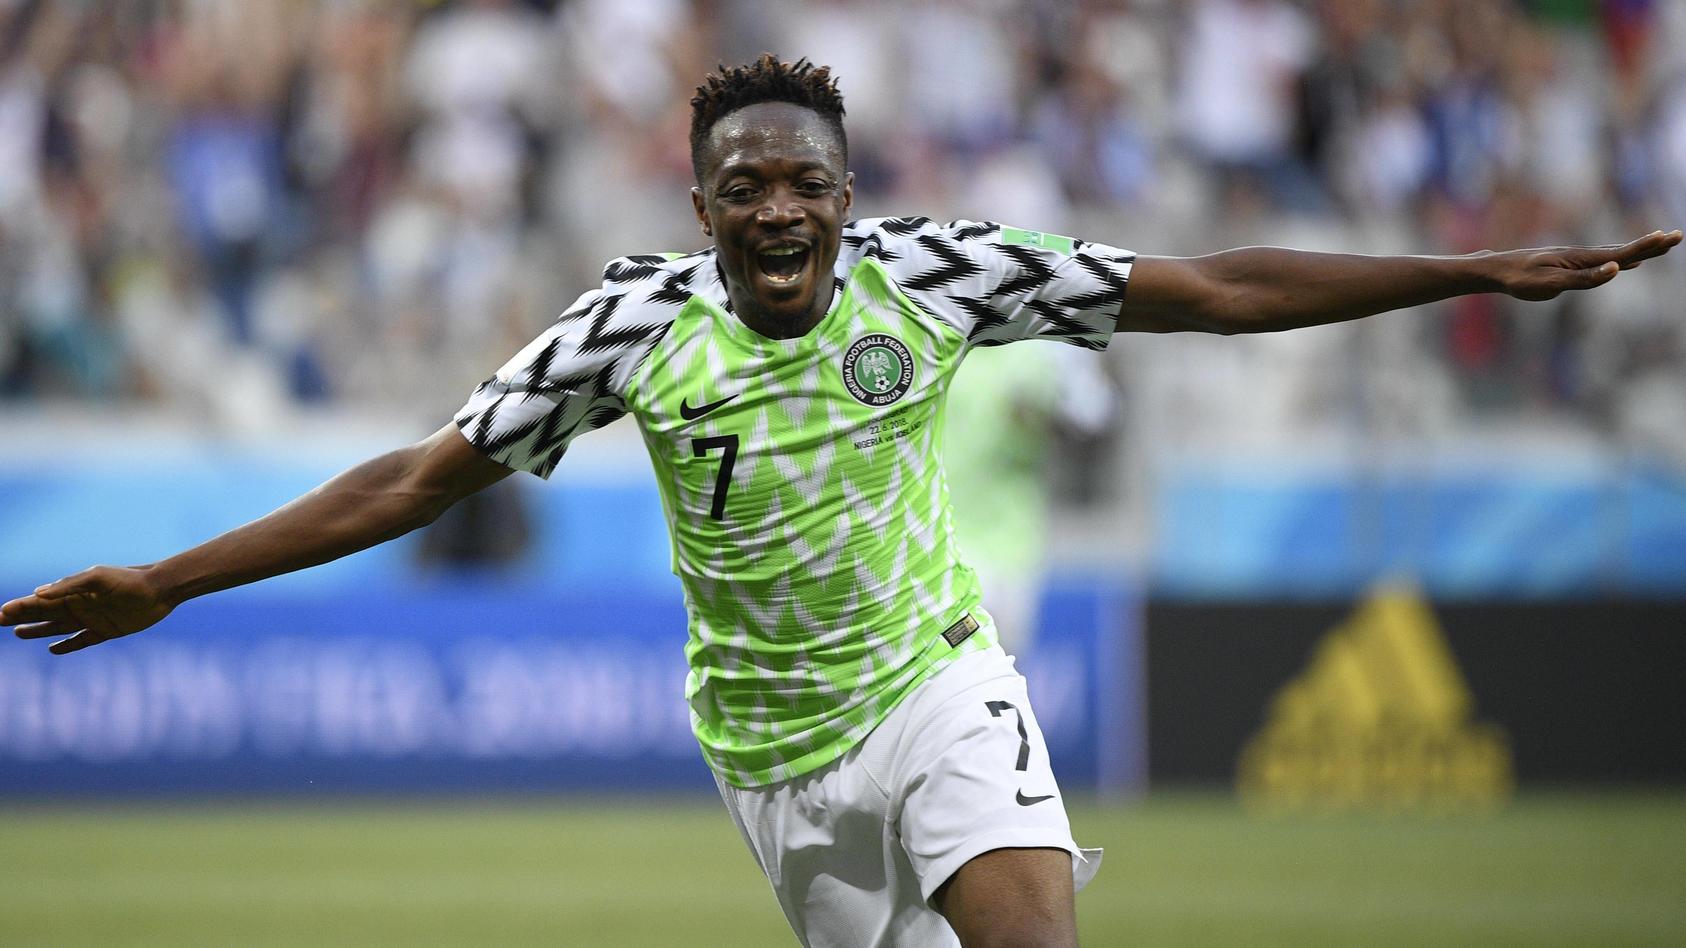 (180622) -- VOLGOGRAD, June 22, 2018 -- Ahmed Musa of Nigeria celebrates his scoring during the 2018 FIFA World Cup WM Weltmeisterschaft Fussball Group D match between Nigeria and Iceland in Volgograd, Russia, June 22, 2018. Nigeria won 2-0. ) (SP)RU